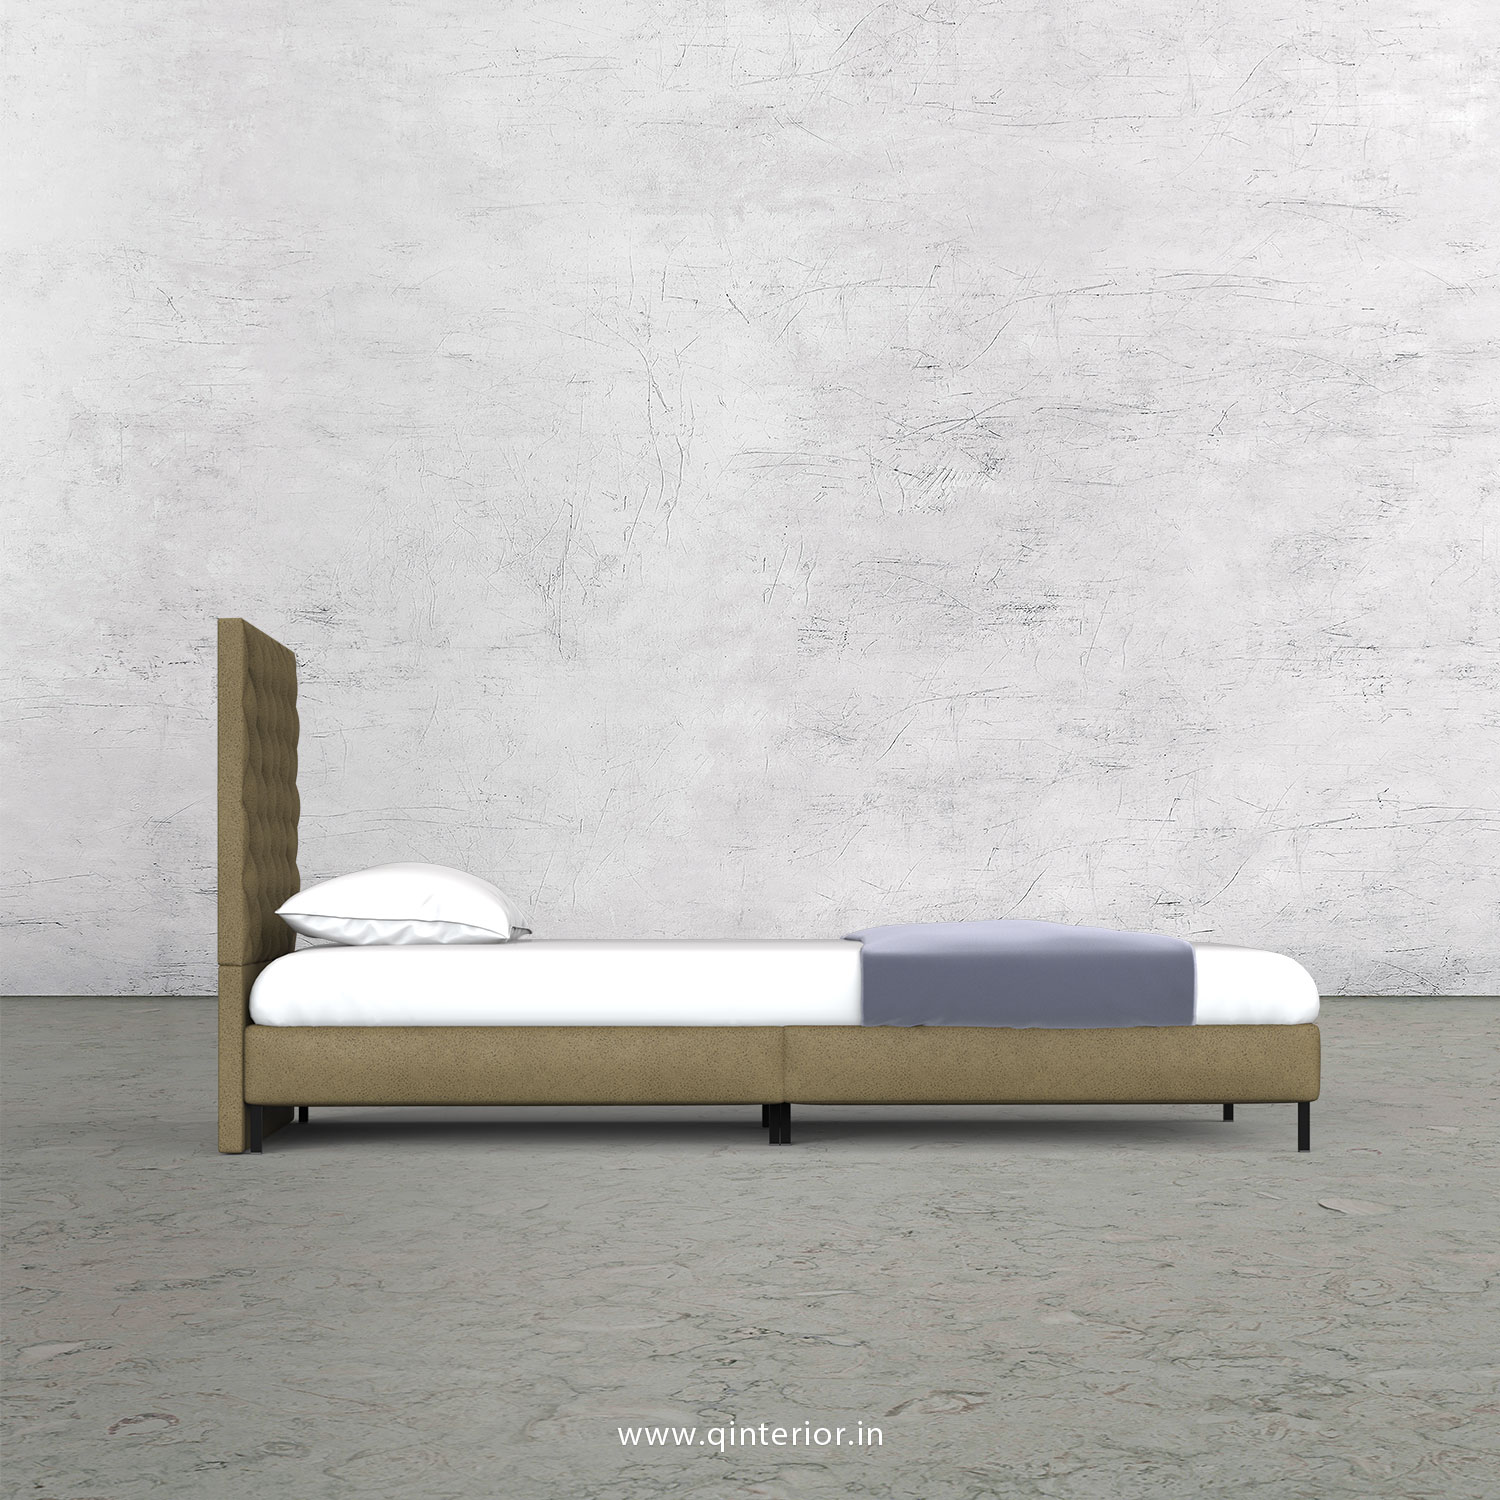 Aquila Single Bed in Fab Leather – SBD003 FL01